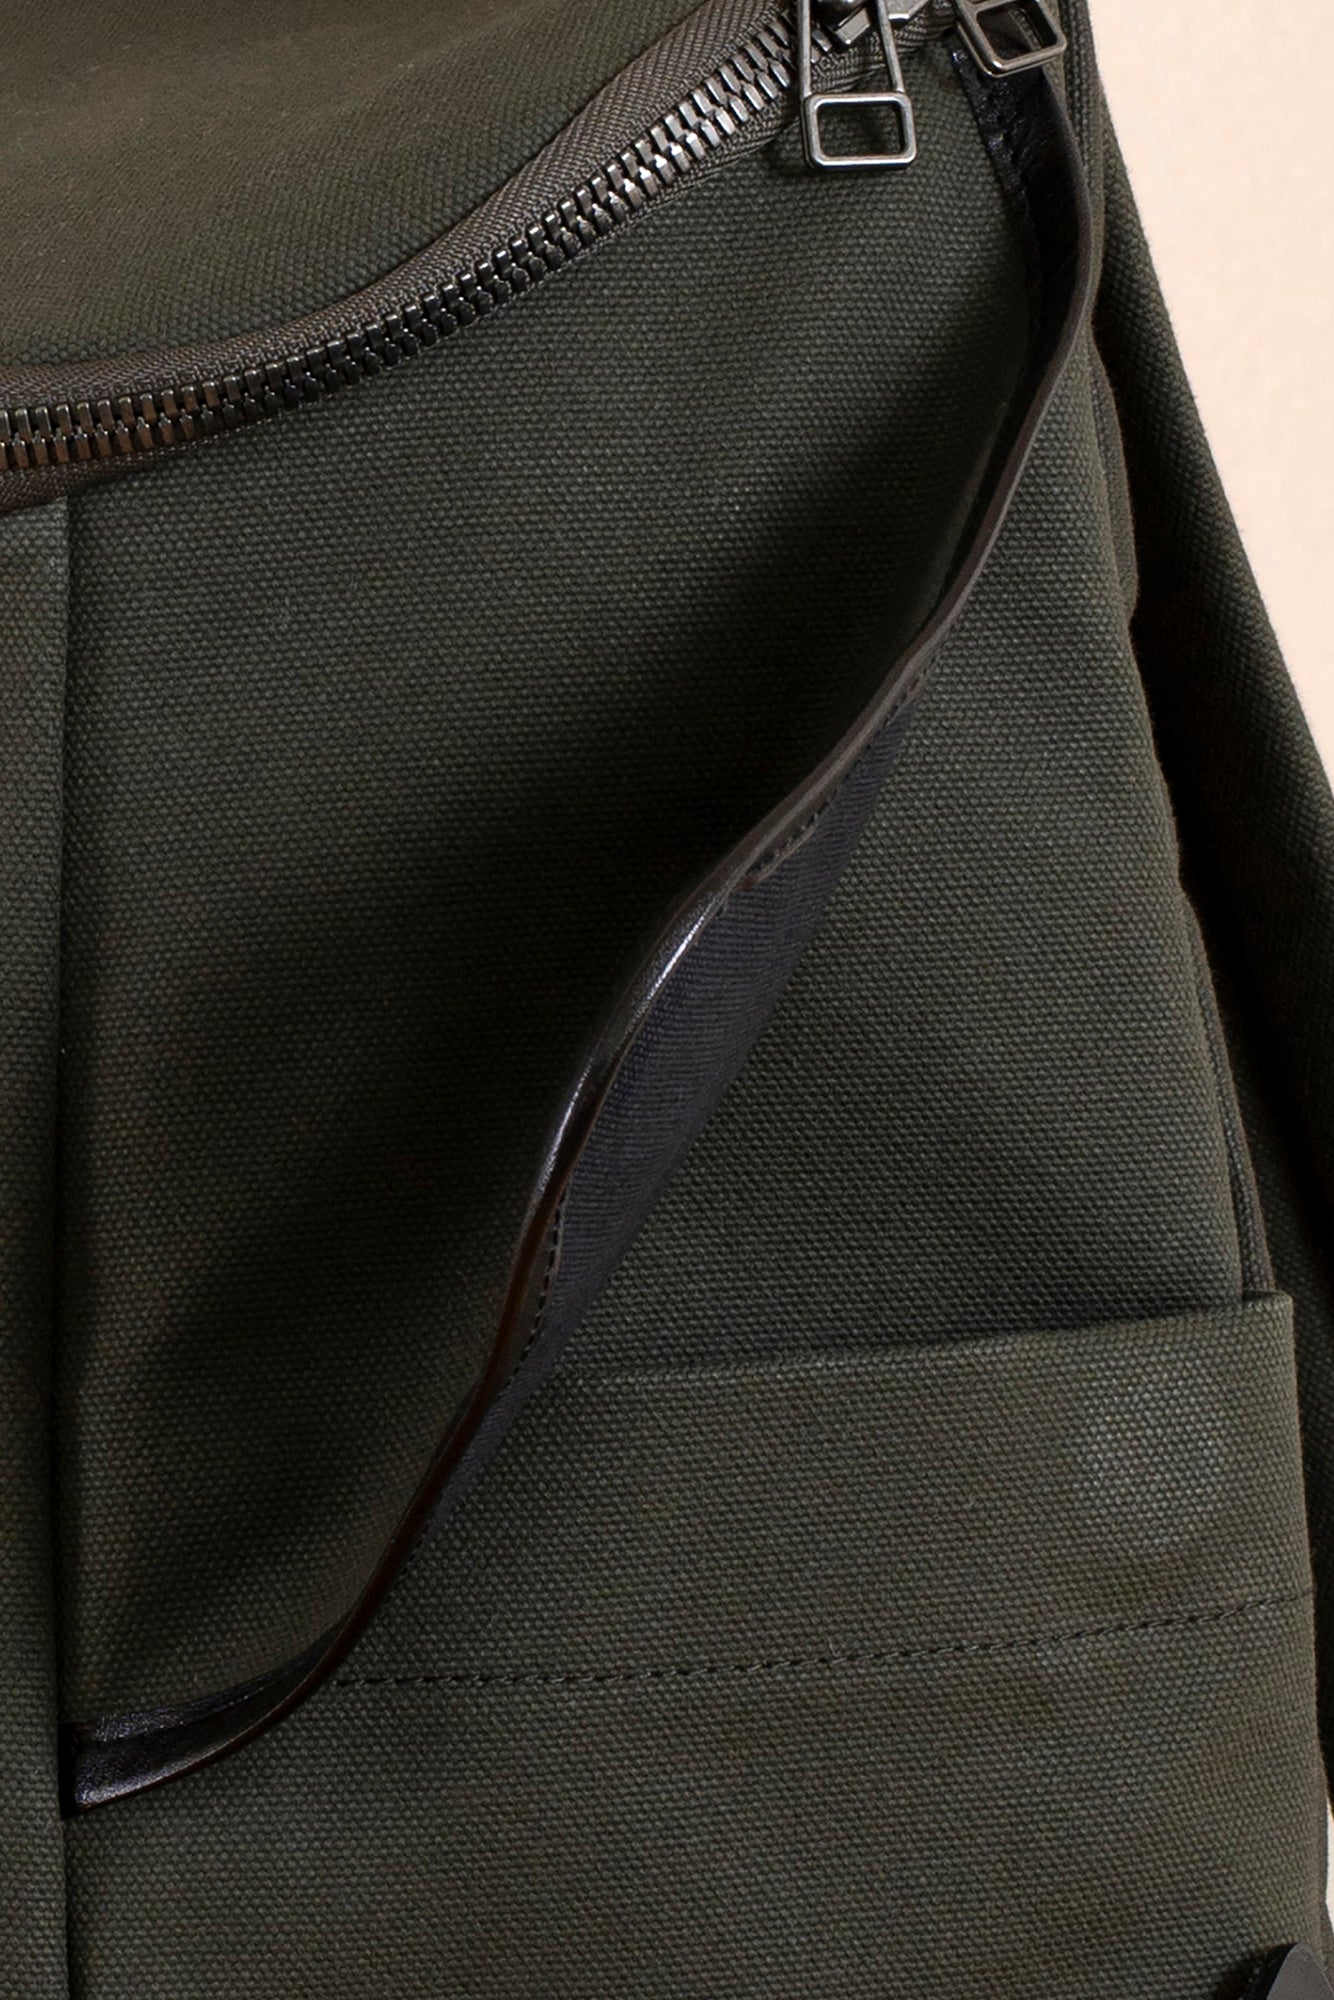 Backpack Olive and Black